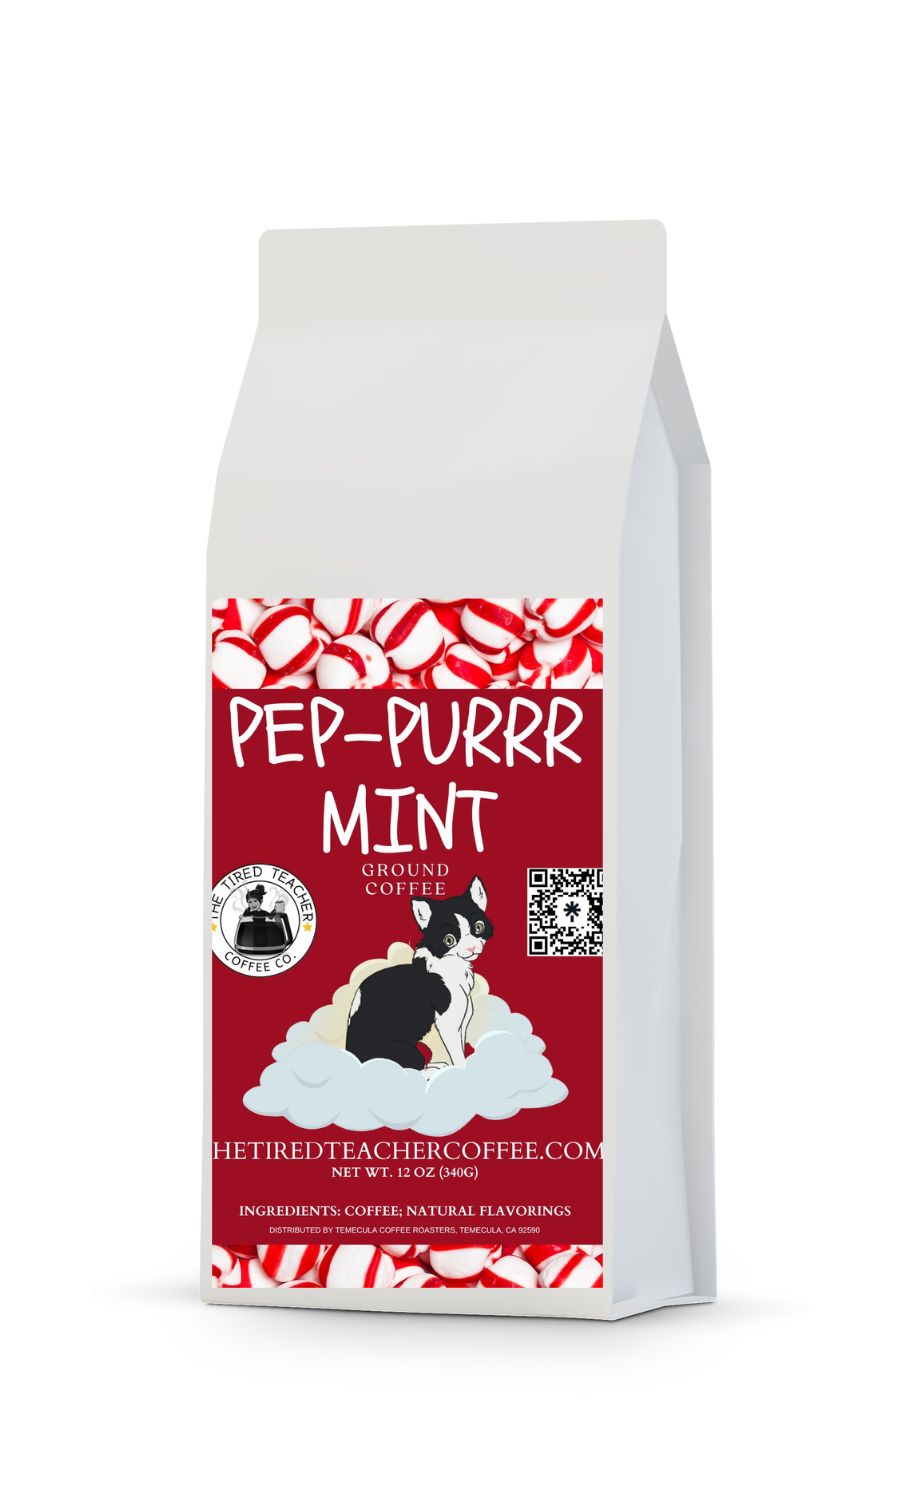 Pep-PURRR Mint~ all Natural flavors